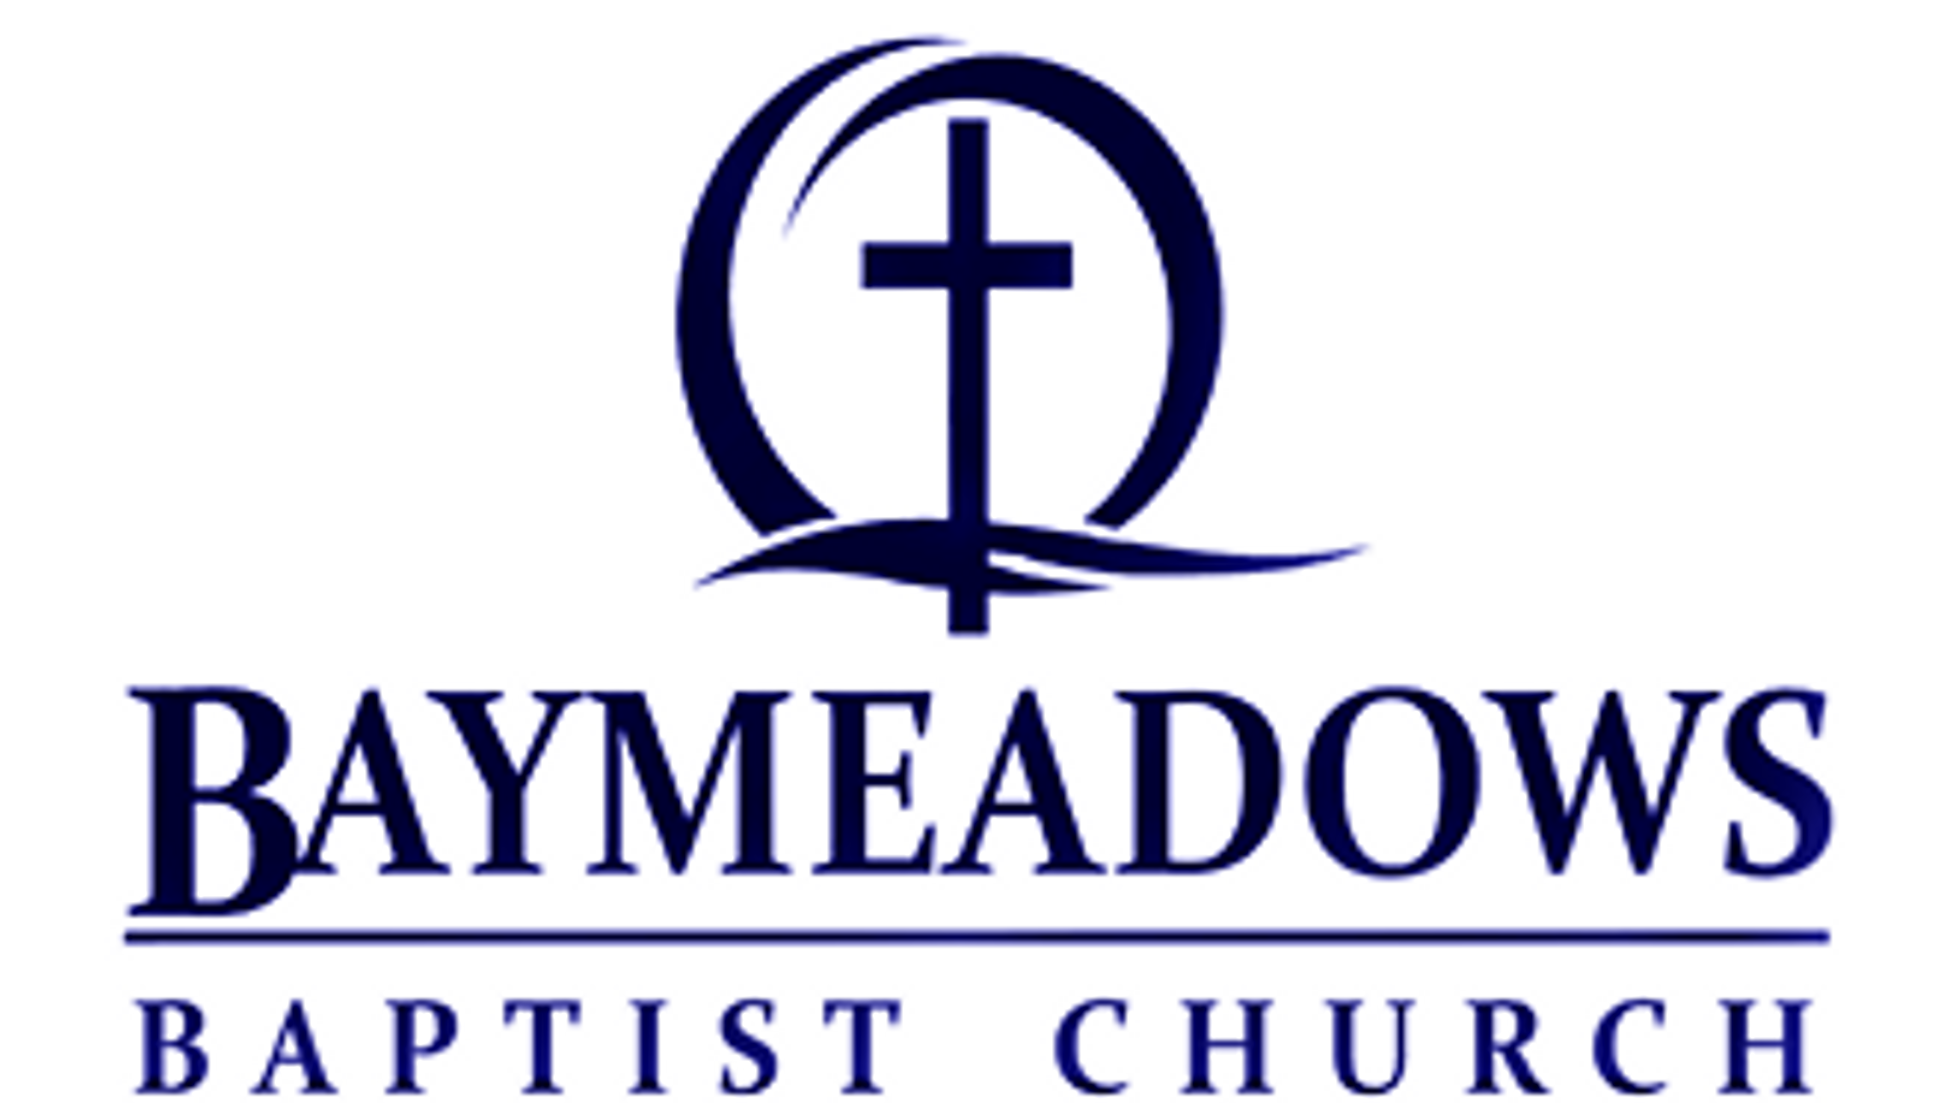 Baymeadows Baptist Church